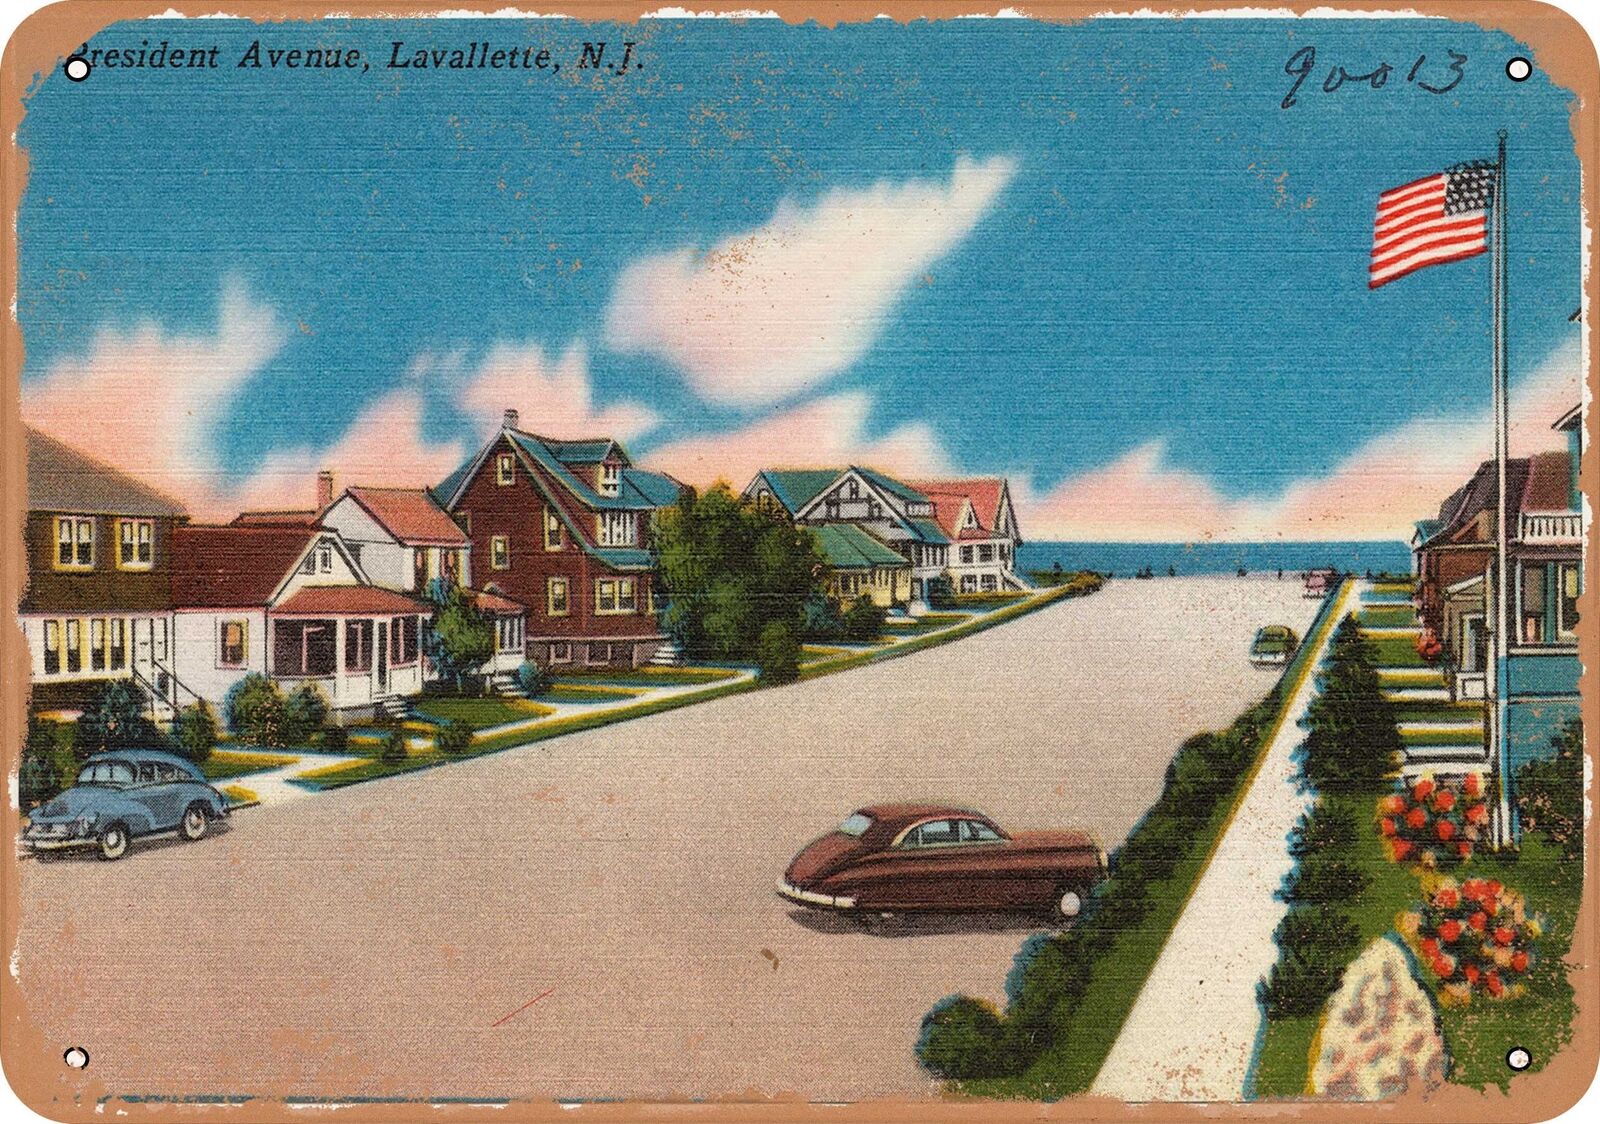 Metal Sign - New Jersey Postcard - President Avenue, Lavallette, N. J.